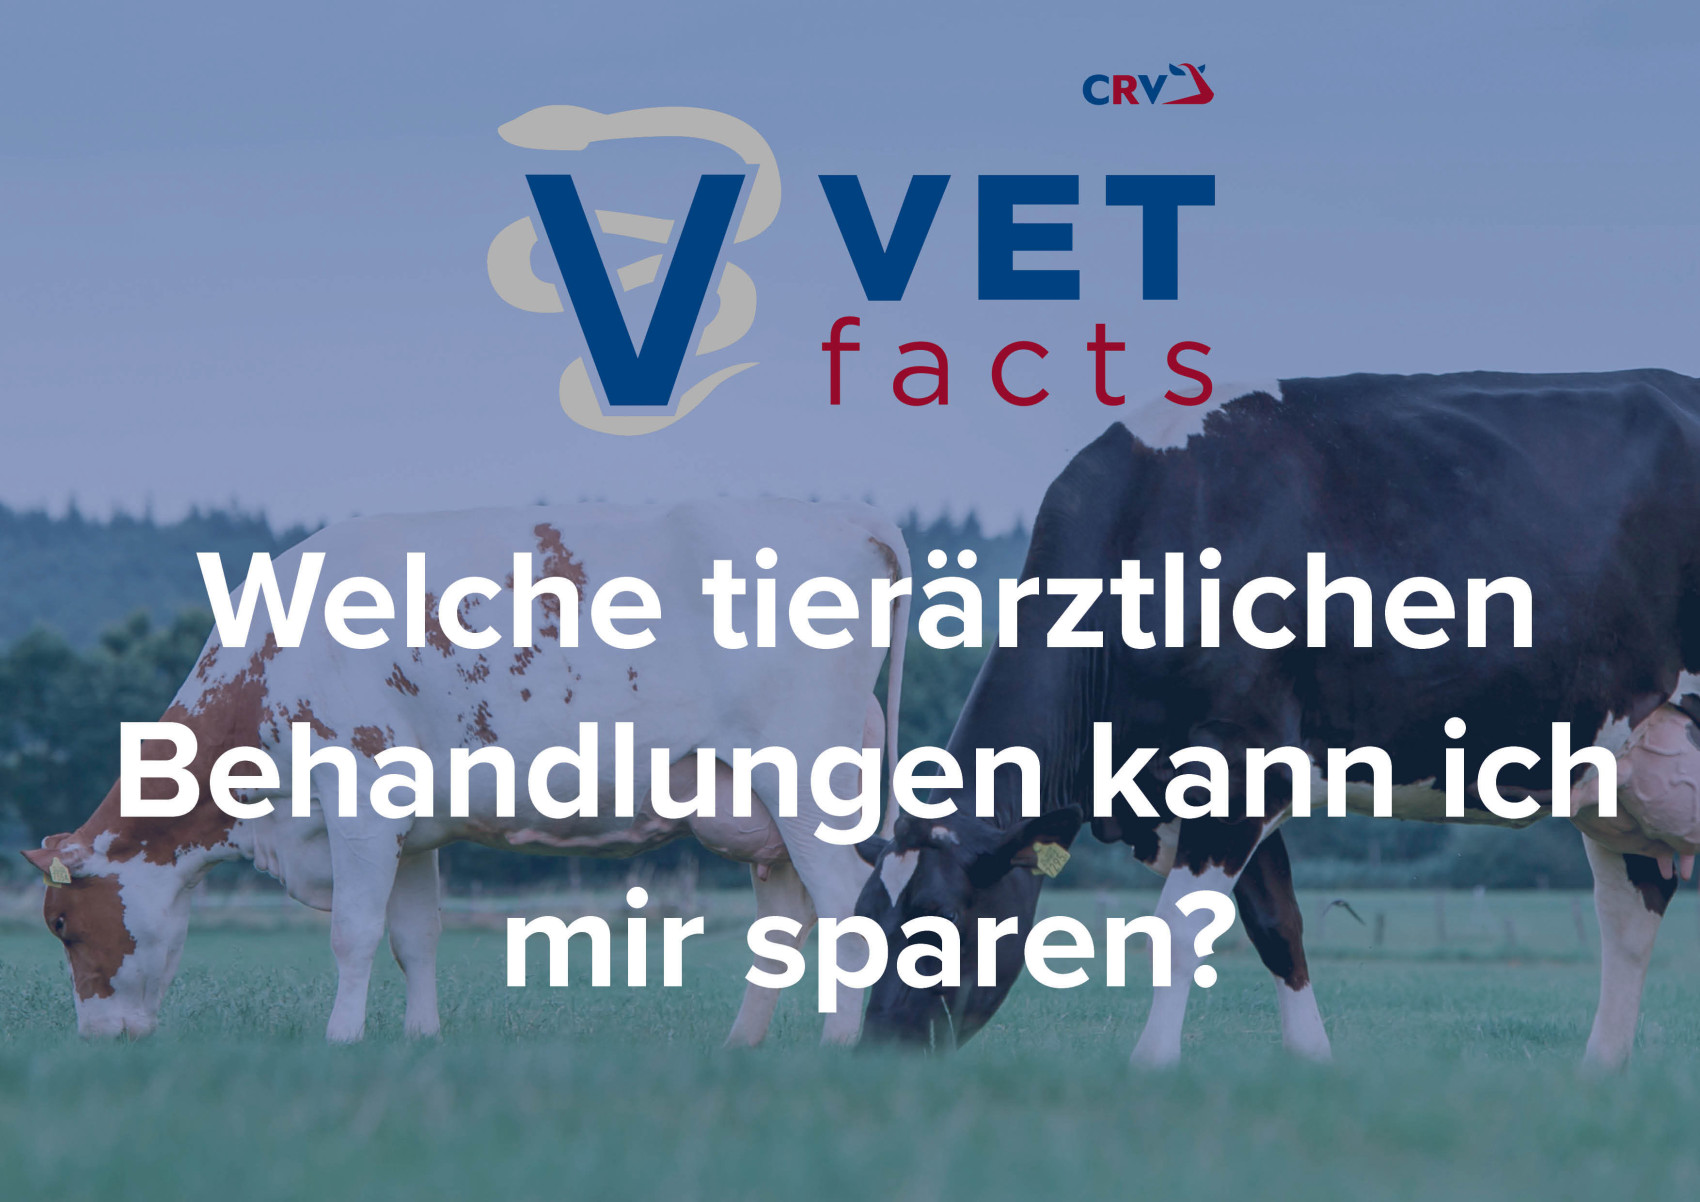 Vet facts - tierärztliche Behandlungen